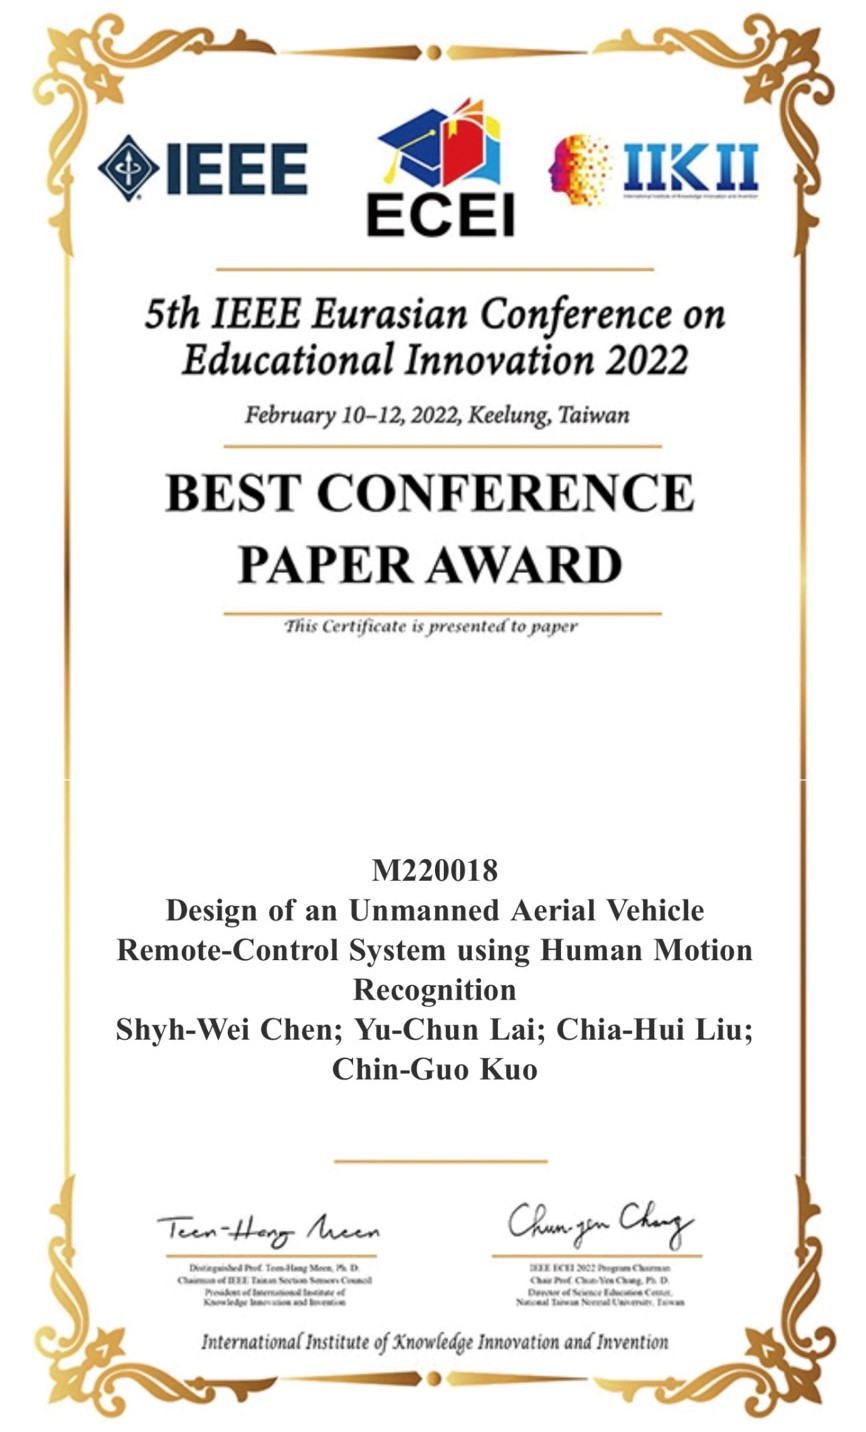 賀！本系陳仕偉老師榮獲5th IEEE ECEI  Best Conference Paper Award